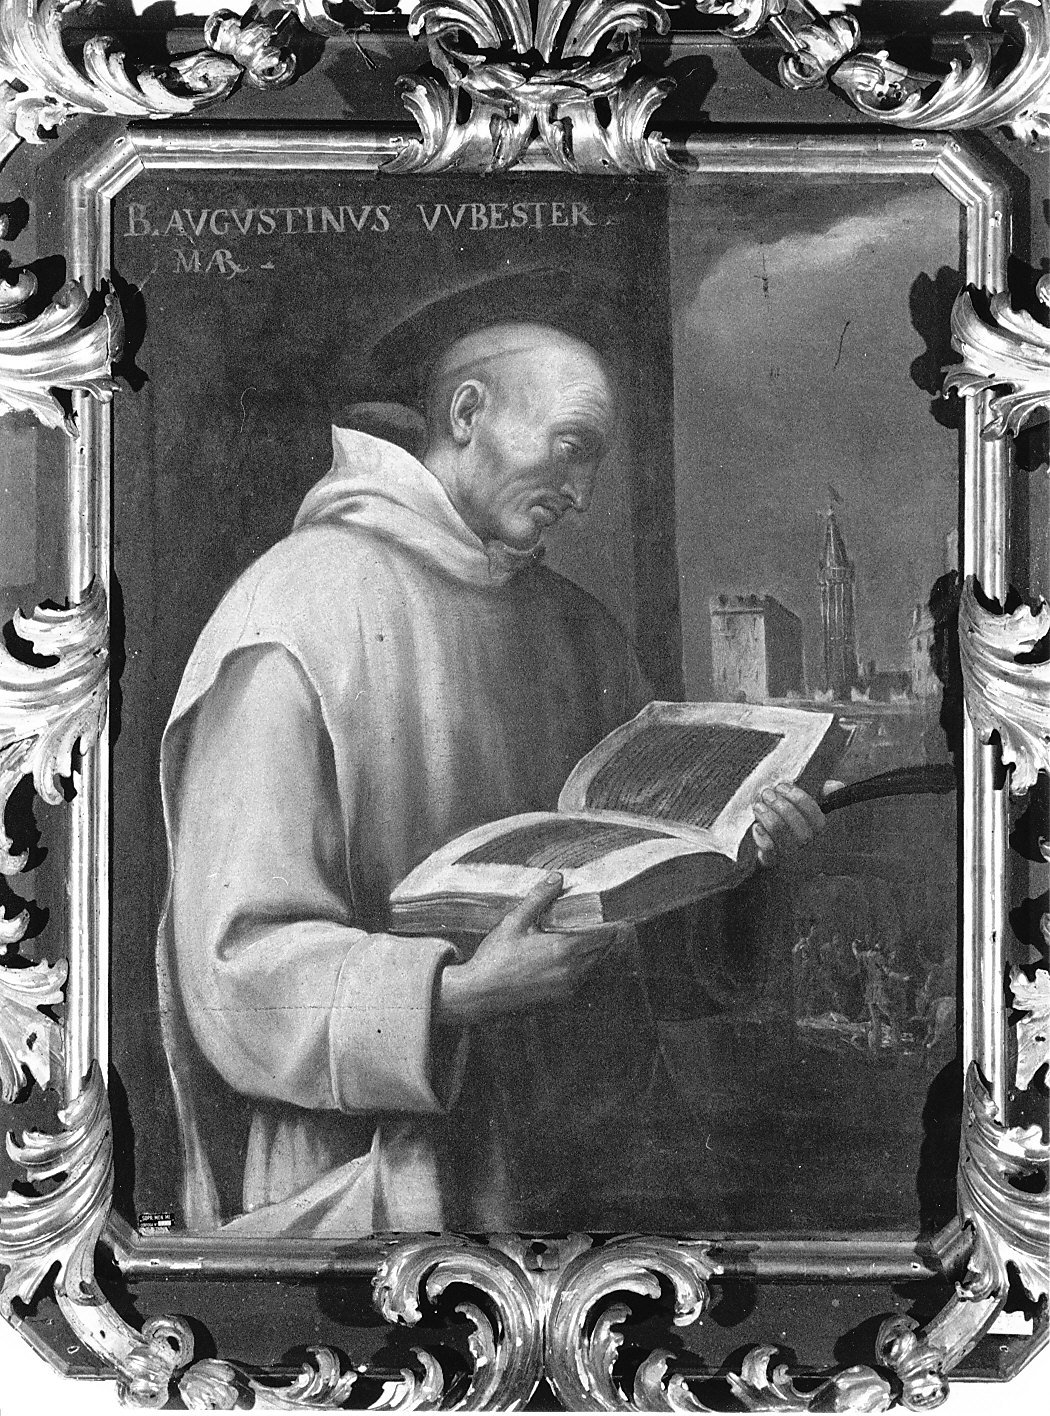 B. Agostino Webster (dipinto, opera isolata) di Vermiglio Giuseppe (bottega) (metà sec. XVII)